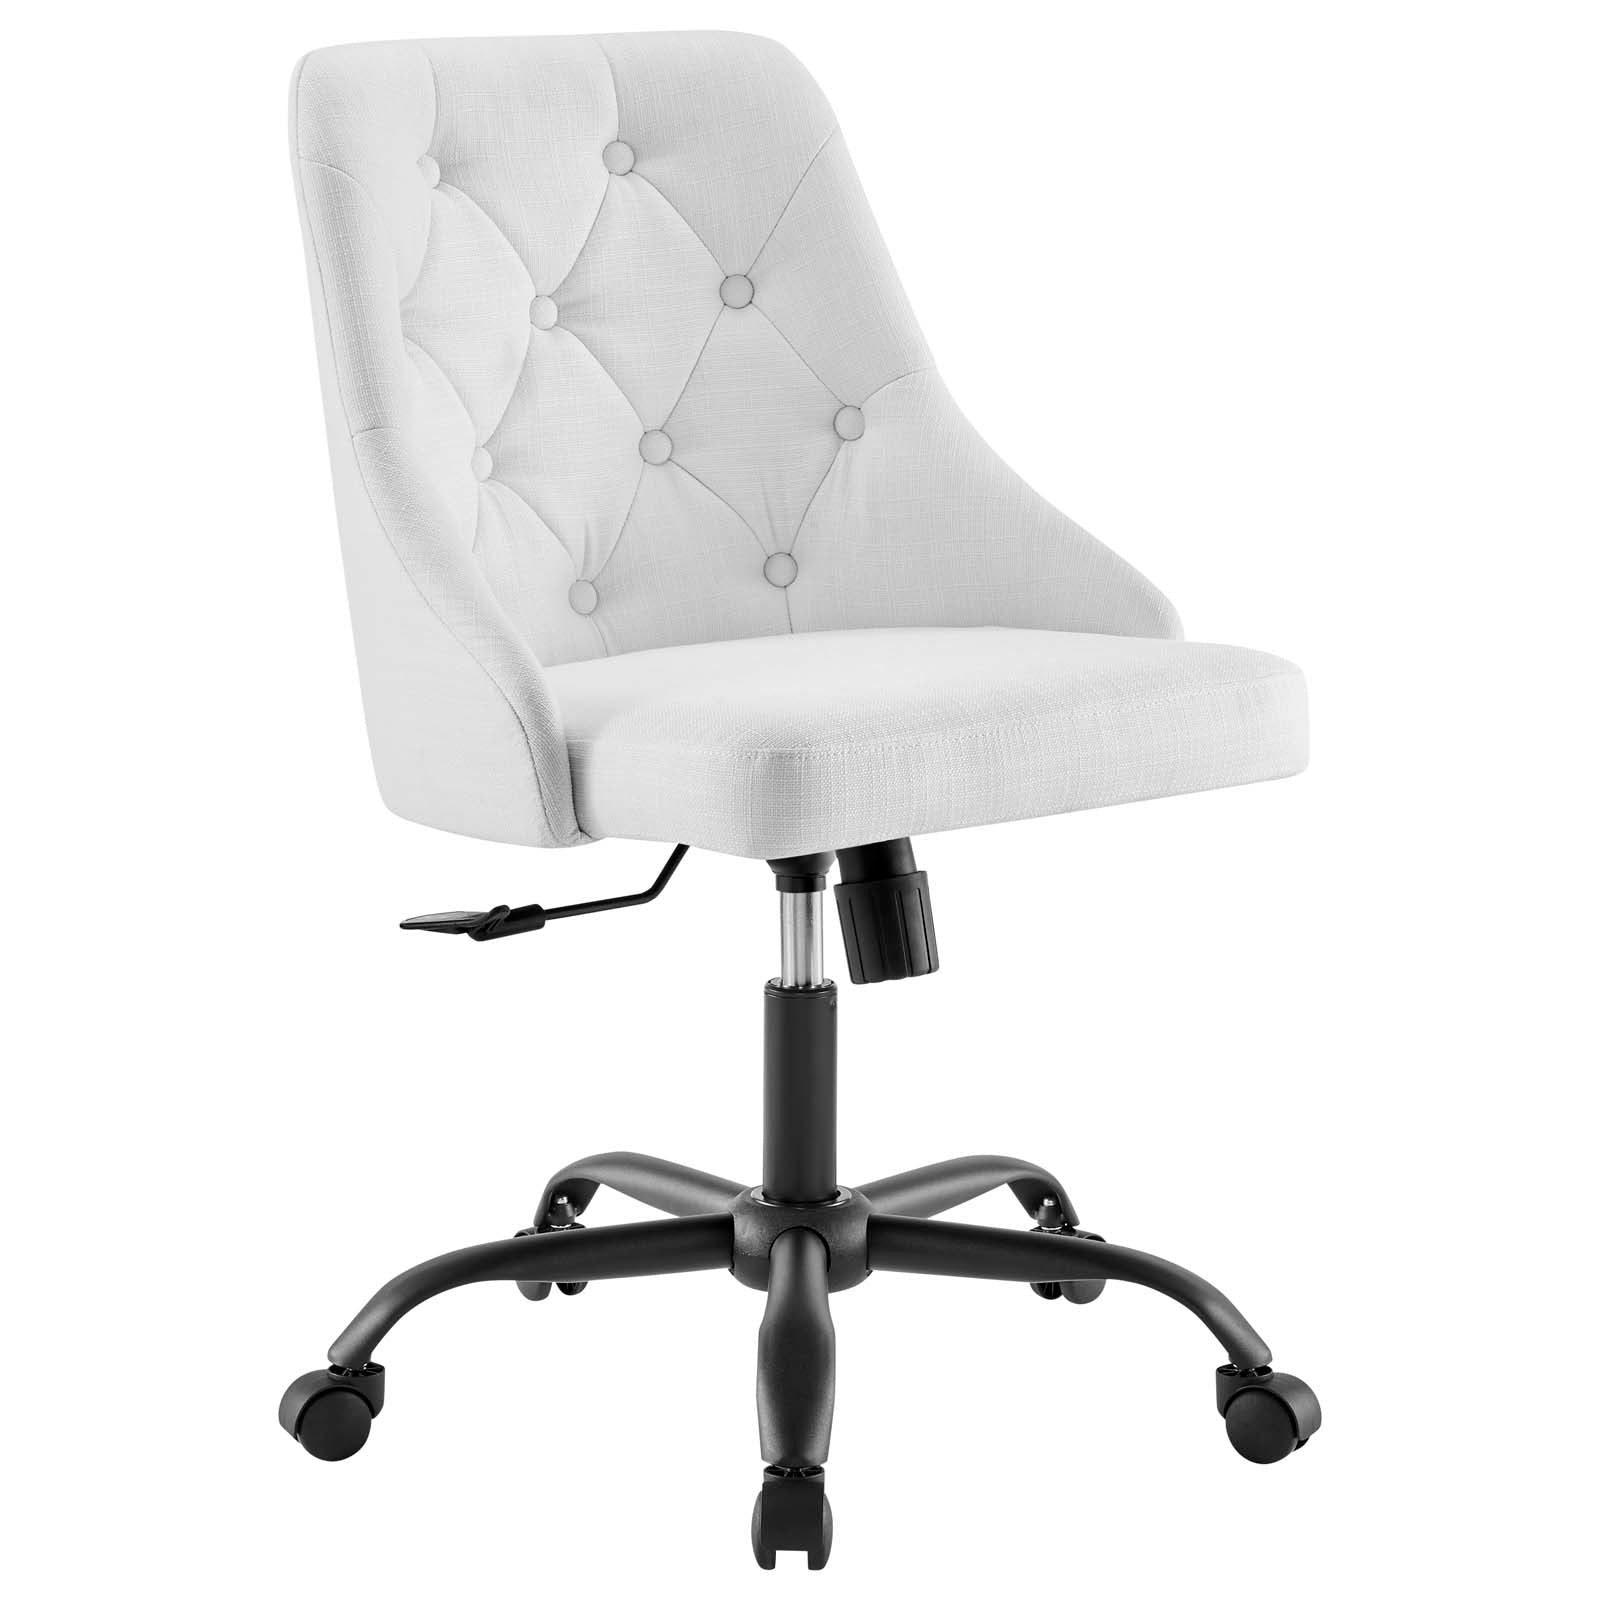 Distinct Tufted Swivel Upholstered Office Chair - East Shore Modern Home Furnishings